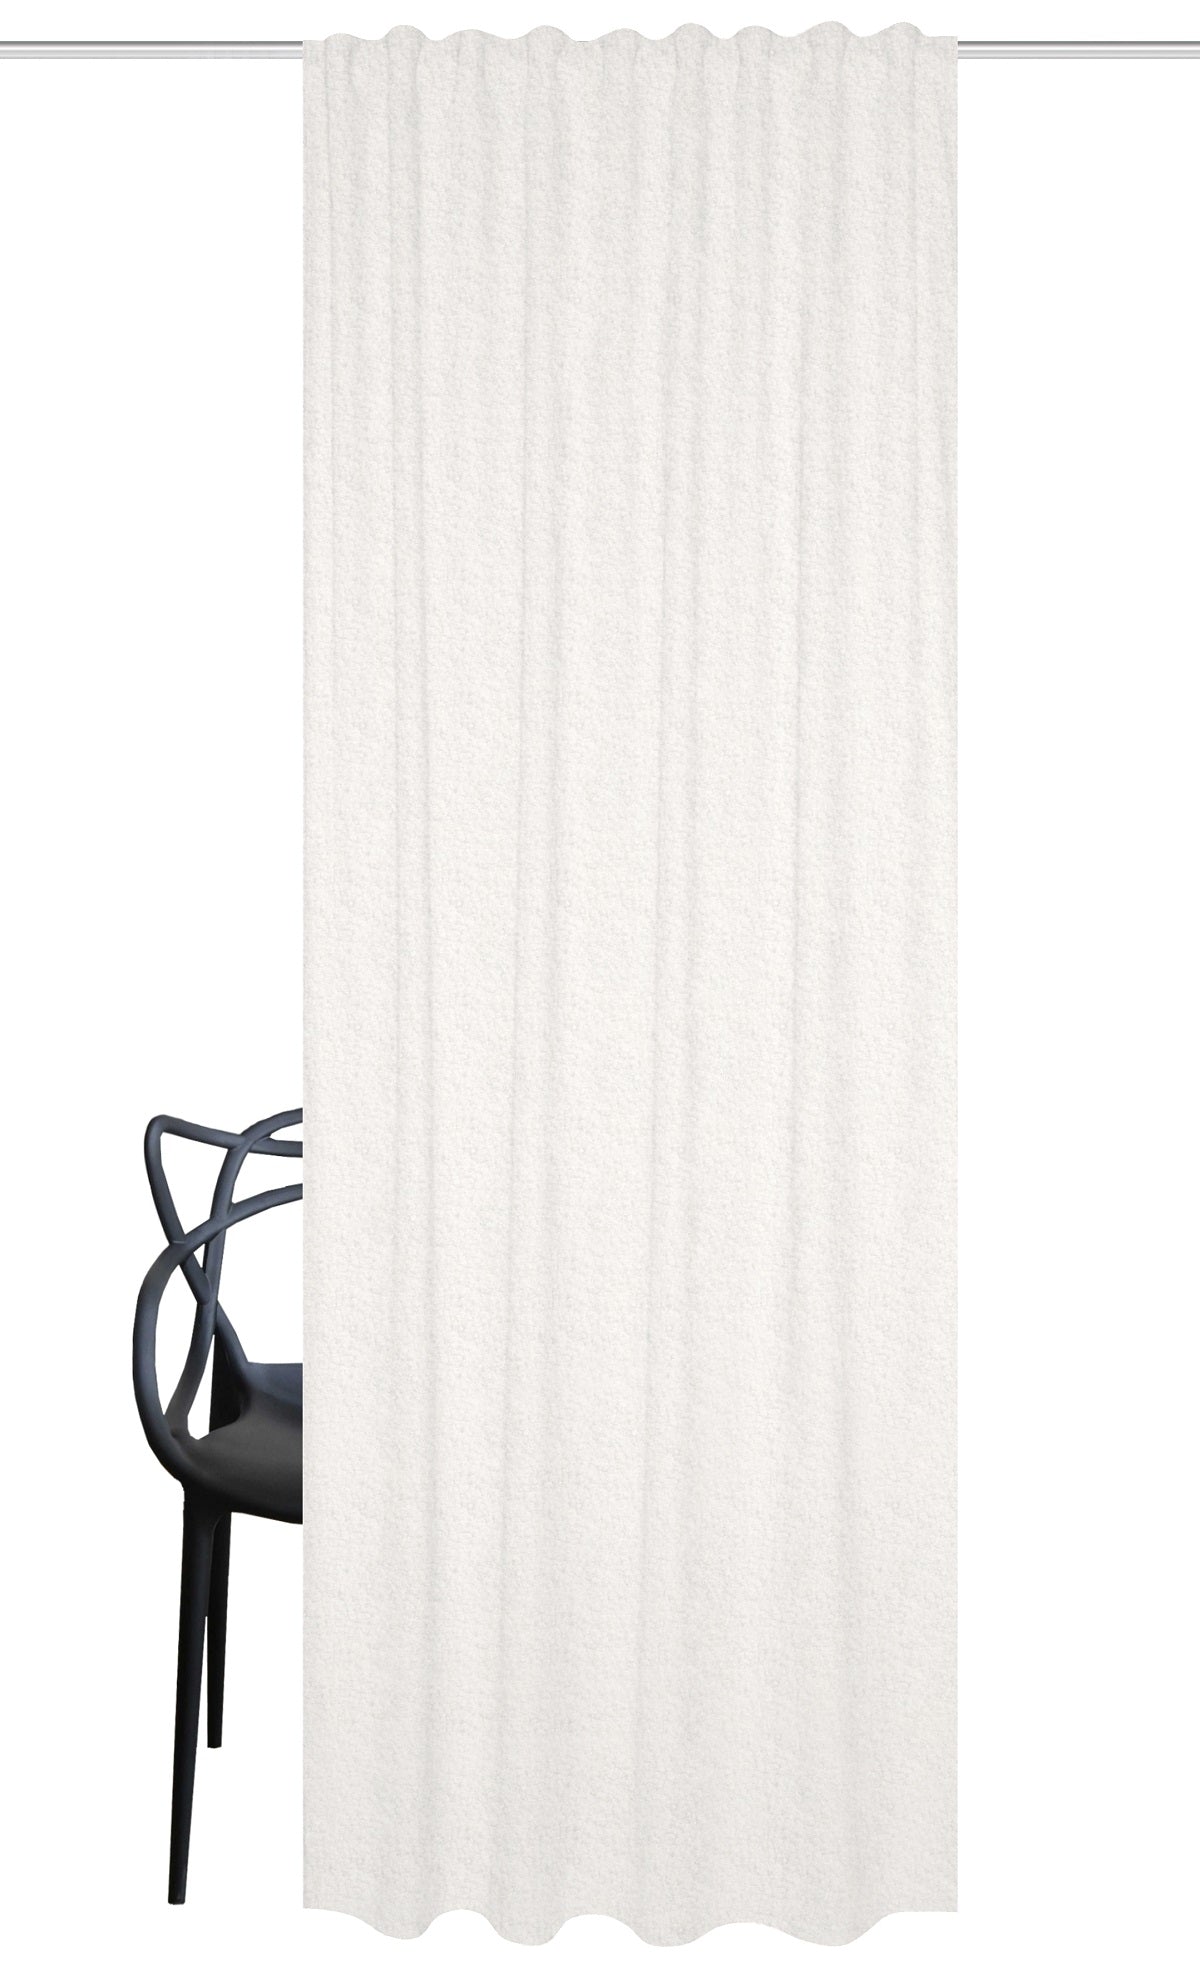 Night curtain wool white Flo